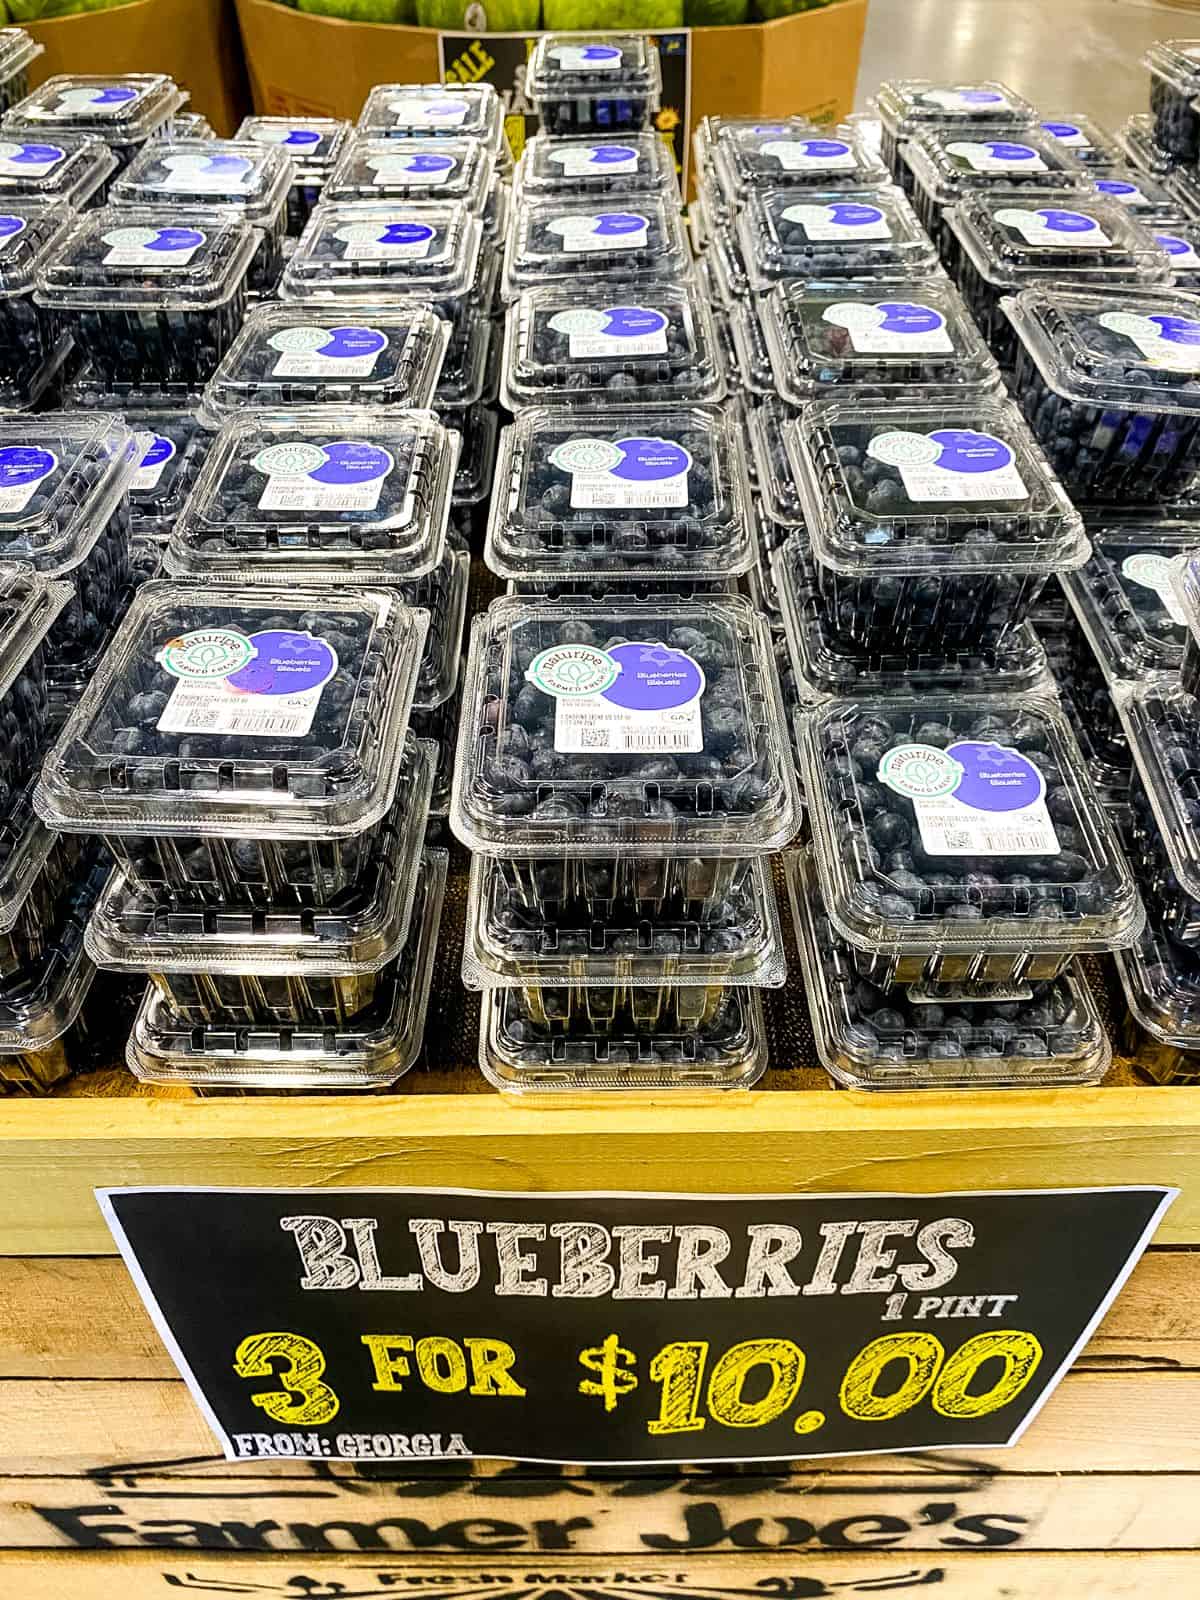 Blueberries on display at supermarket.